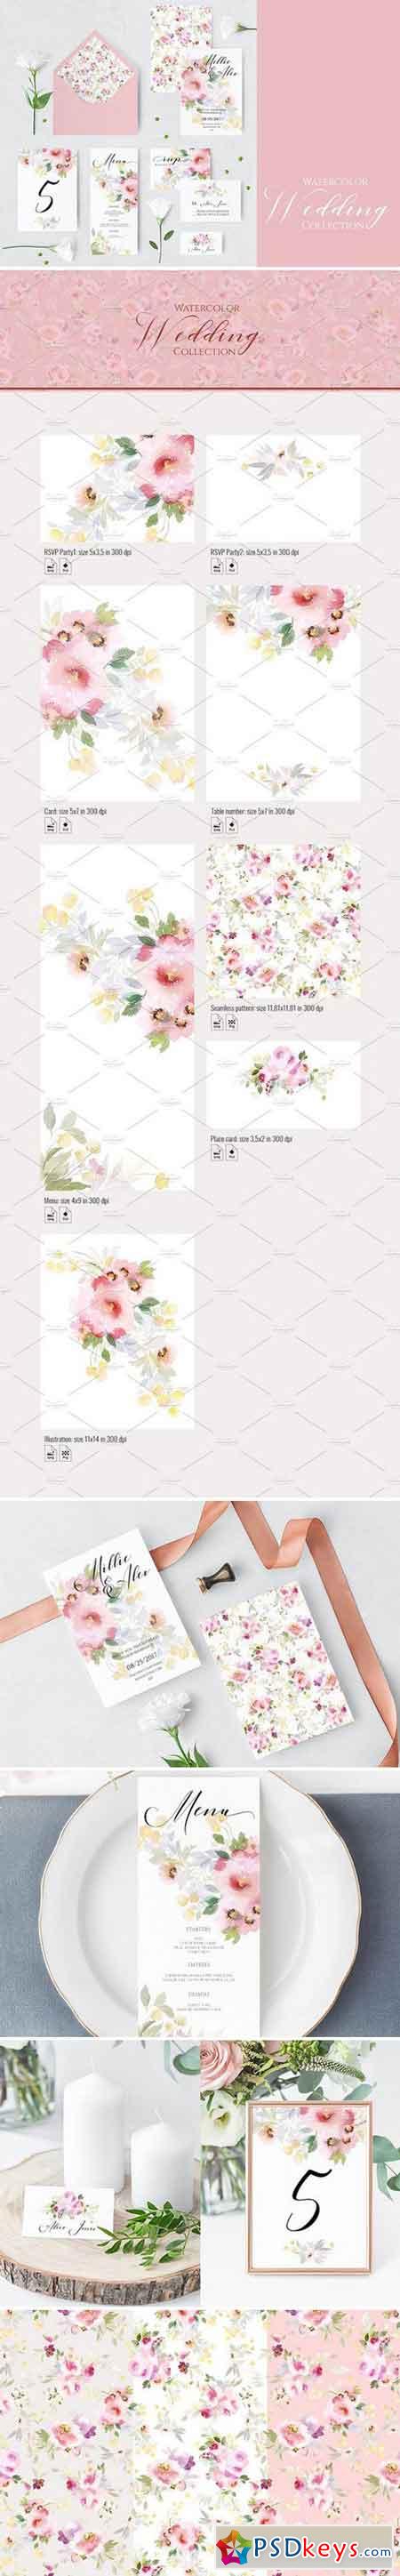 Floral wedding invitations 2223975